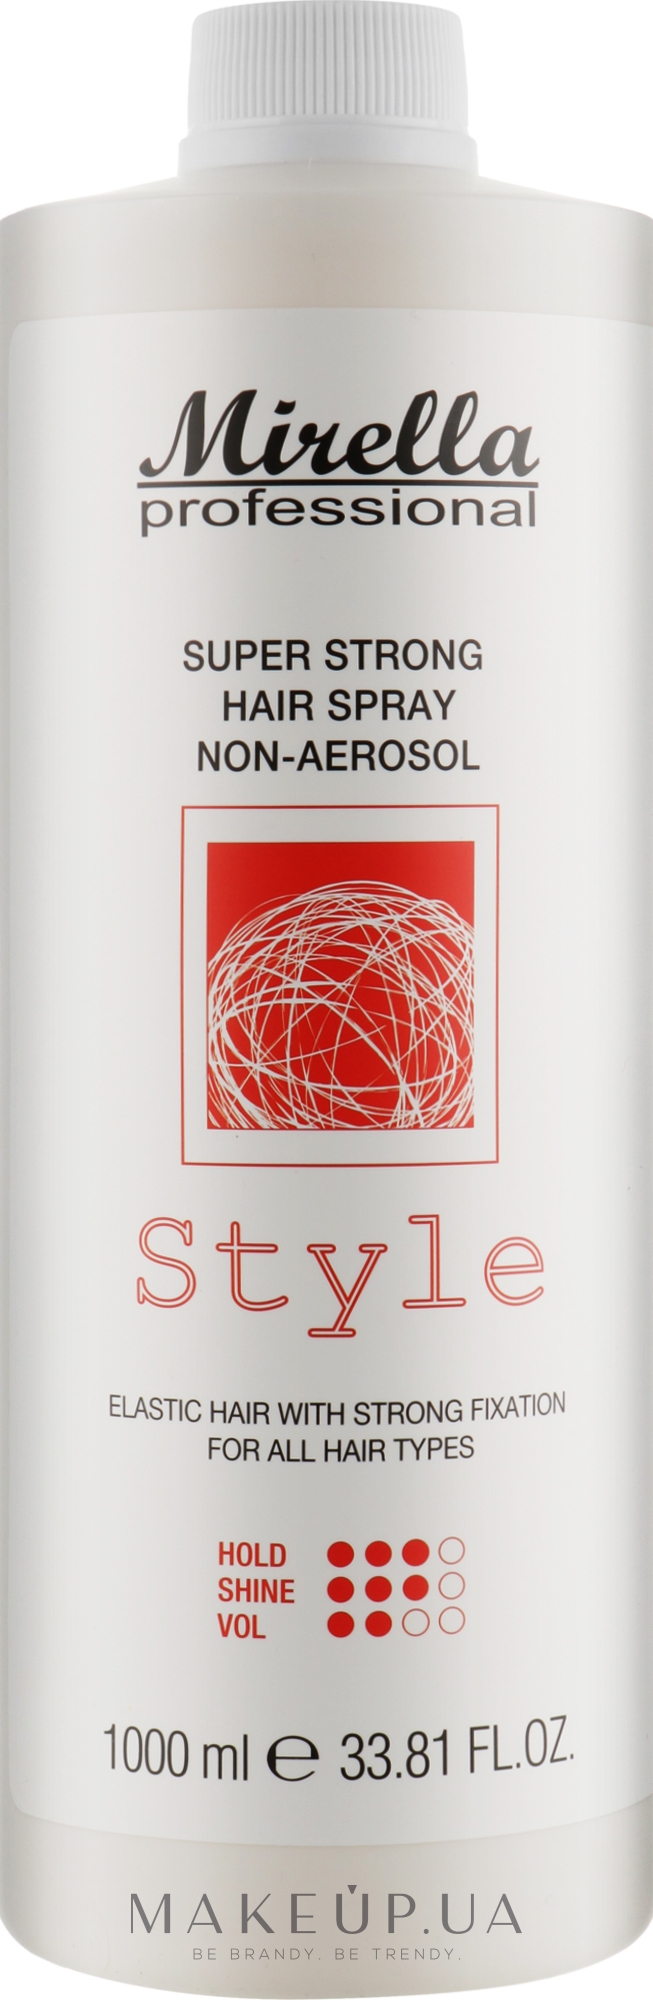 Жидкий лак для укладки волос - Mirella Professional Style Super Strong Hair Spray Non-Aerosol  — фото 1000ml